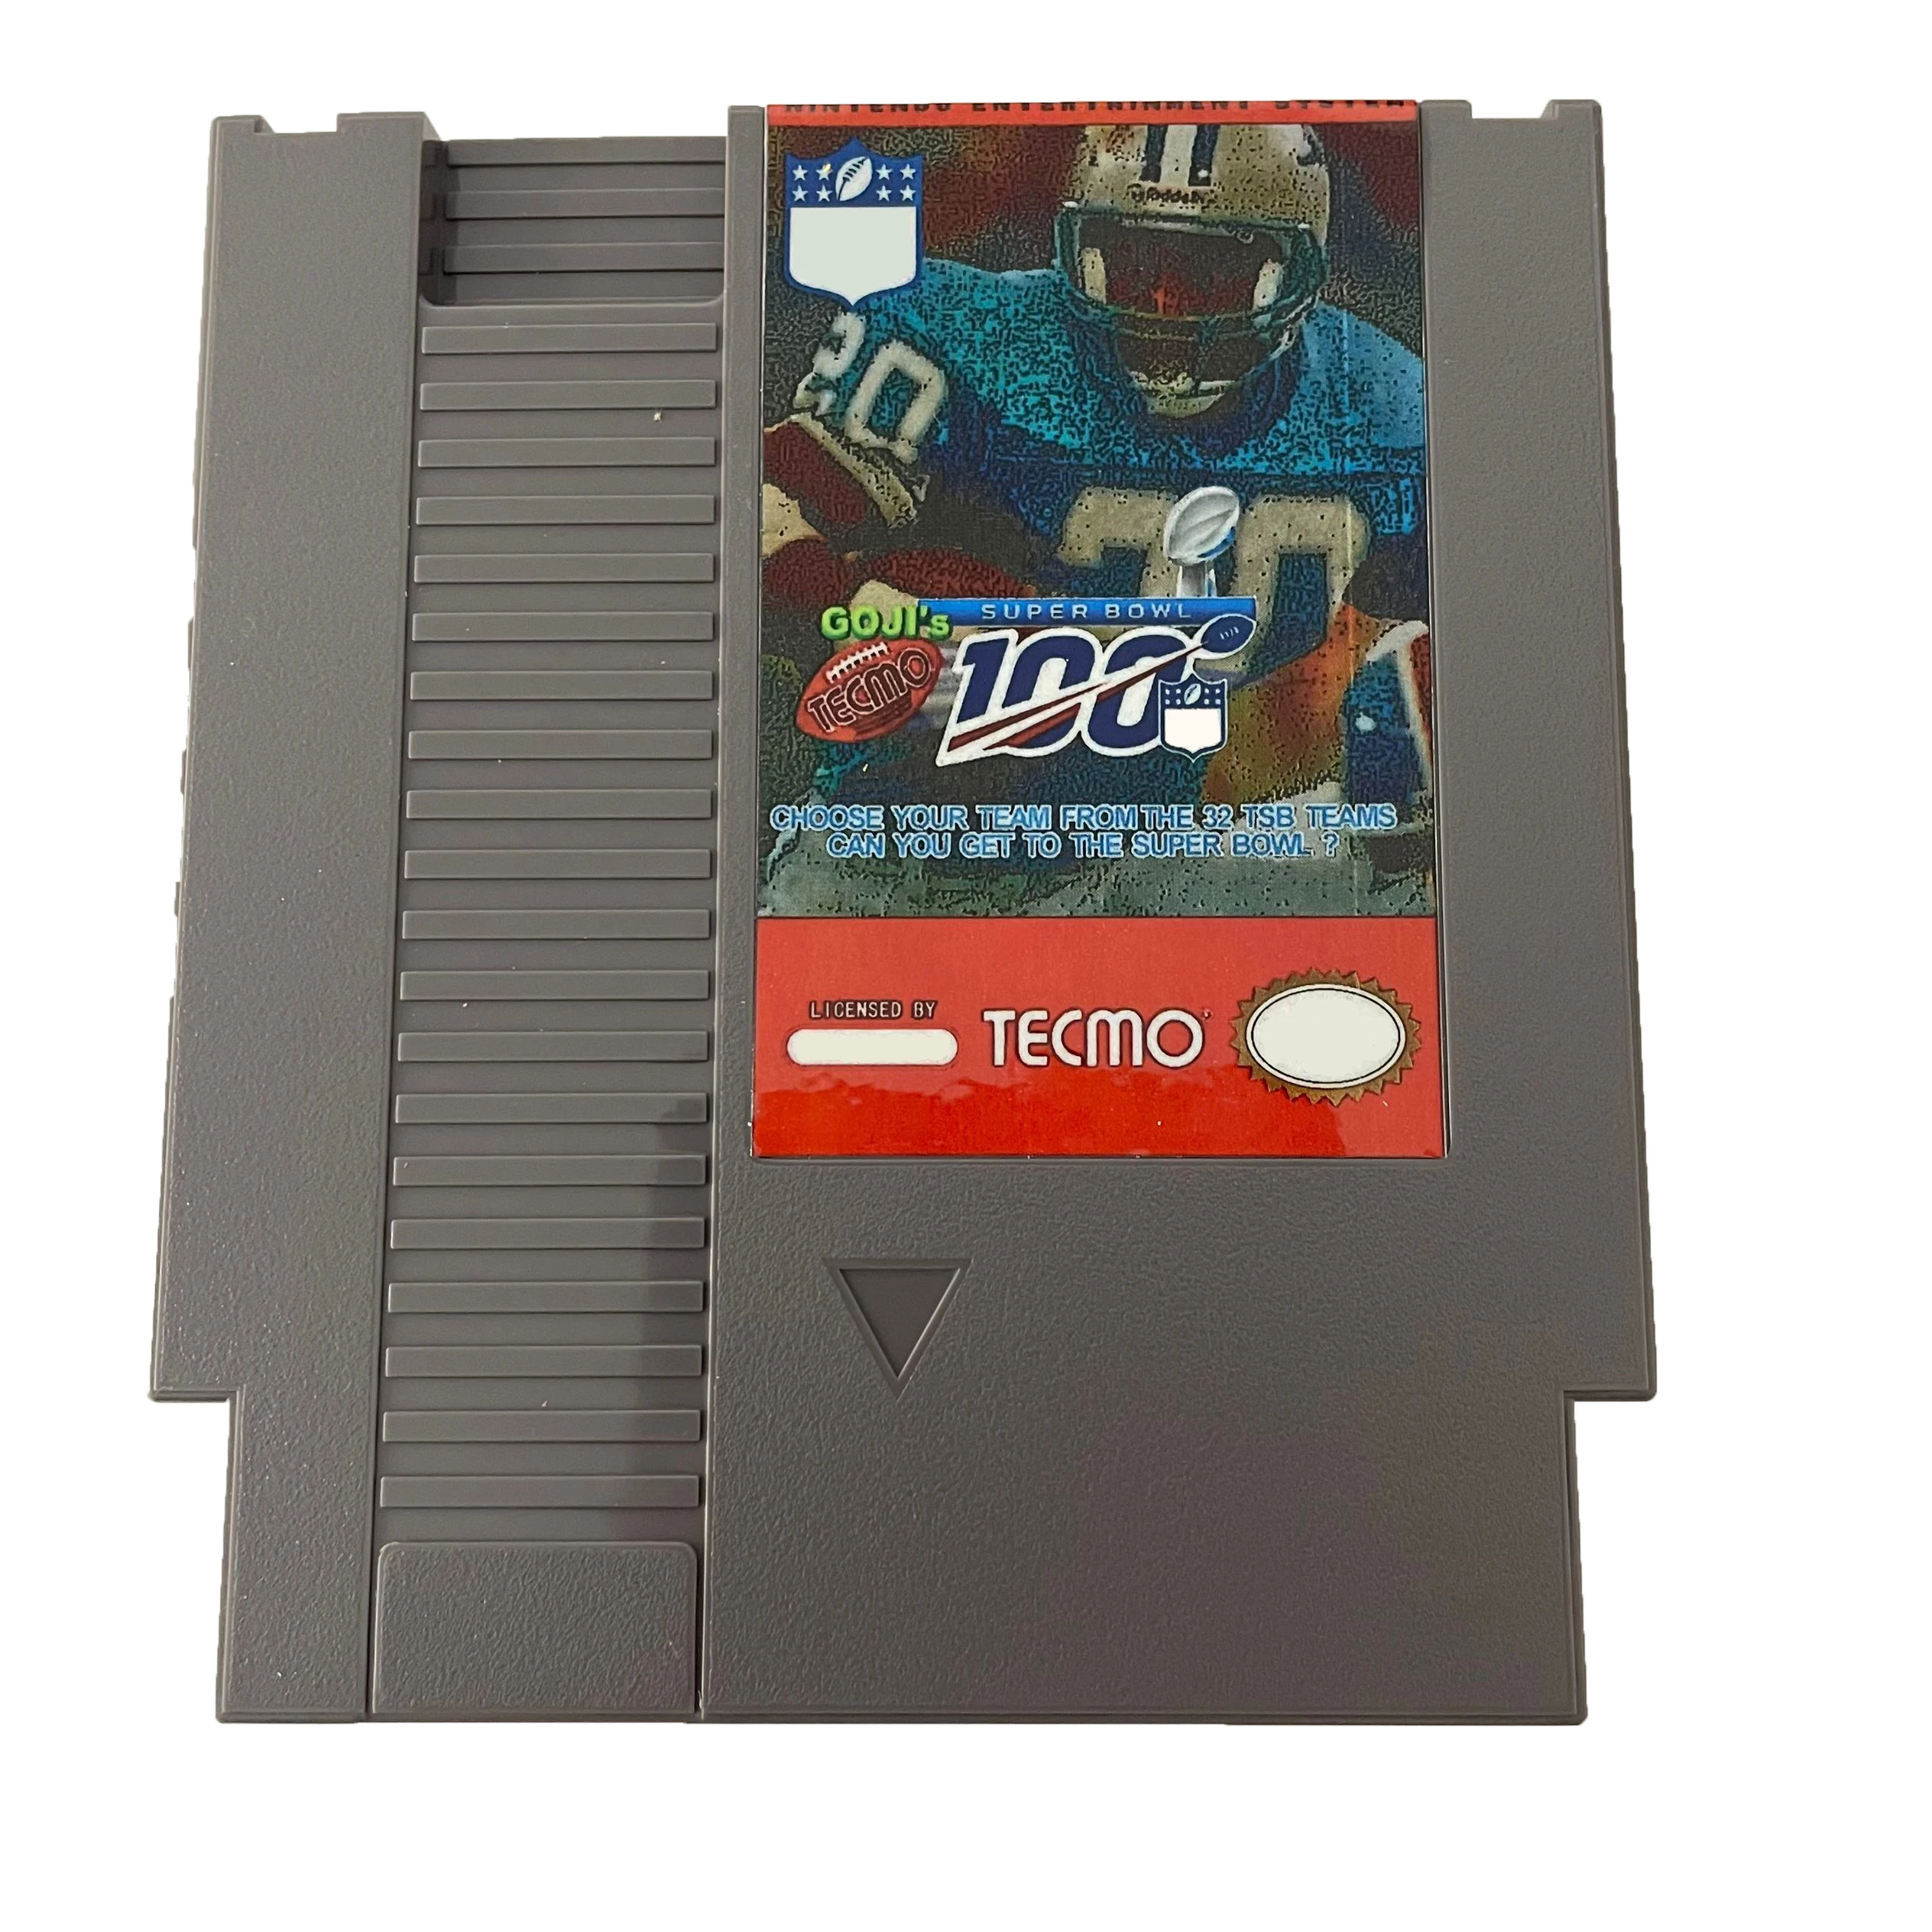 

Goji's Tecmo Super Bowl NFL100 Standard Version - NES Game Cartridge For 72 Pins 8 Bit Video Game Console